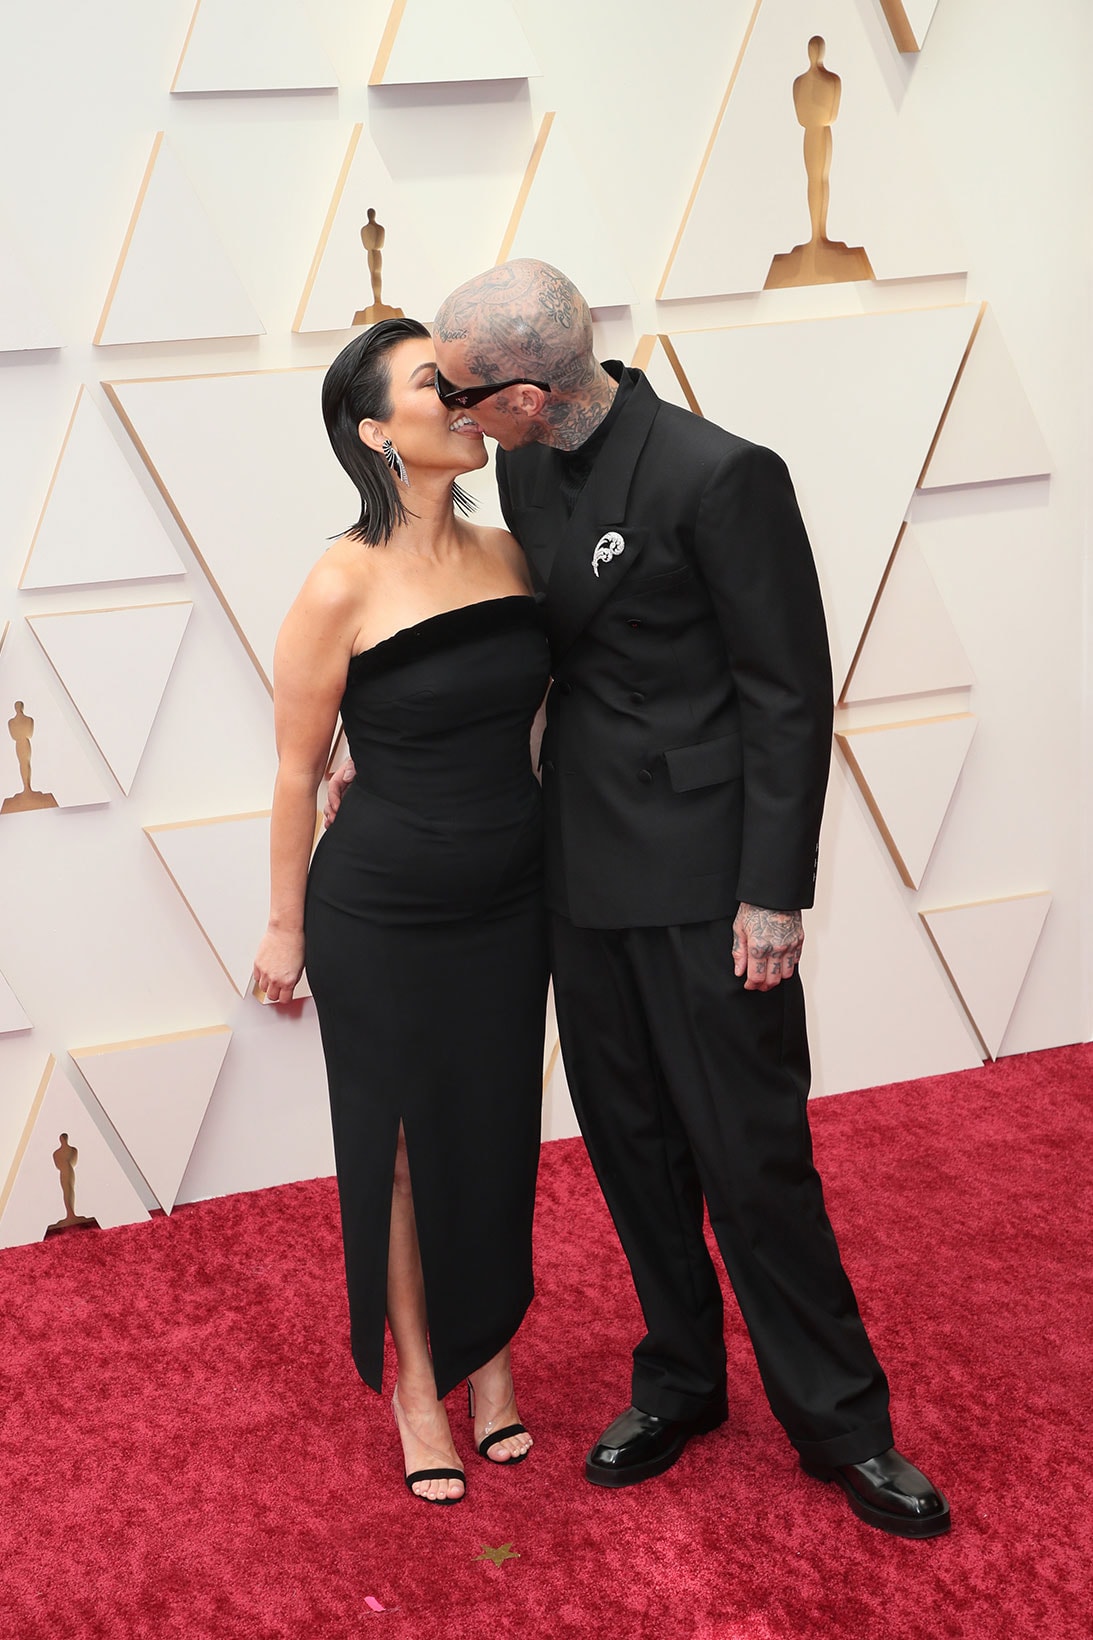 Kourtney Kardashian Travis Barker Making Out Oscars 94th Academy Awards Red Carpet Outfits